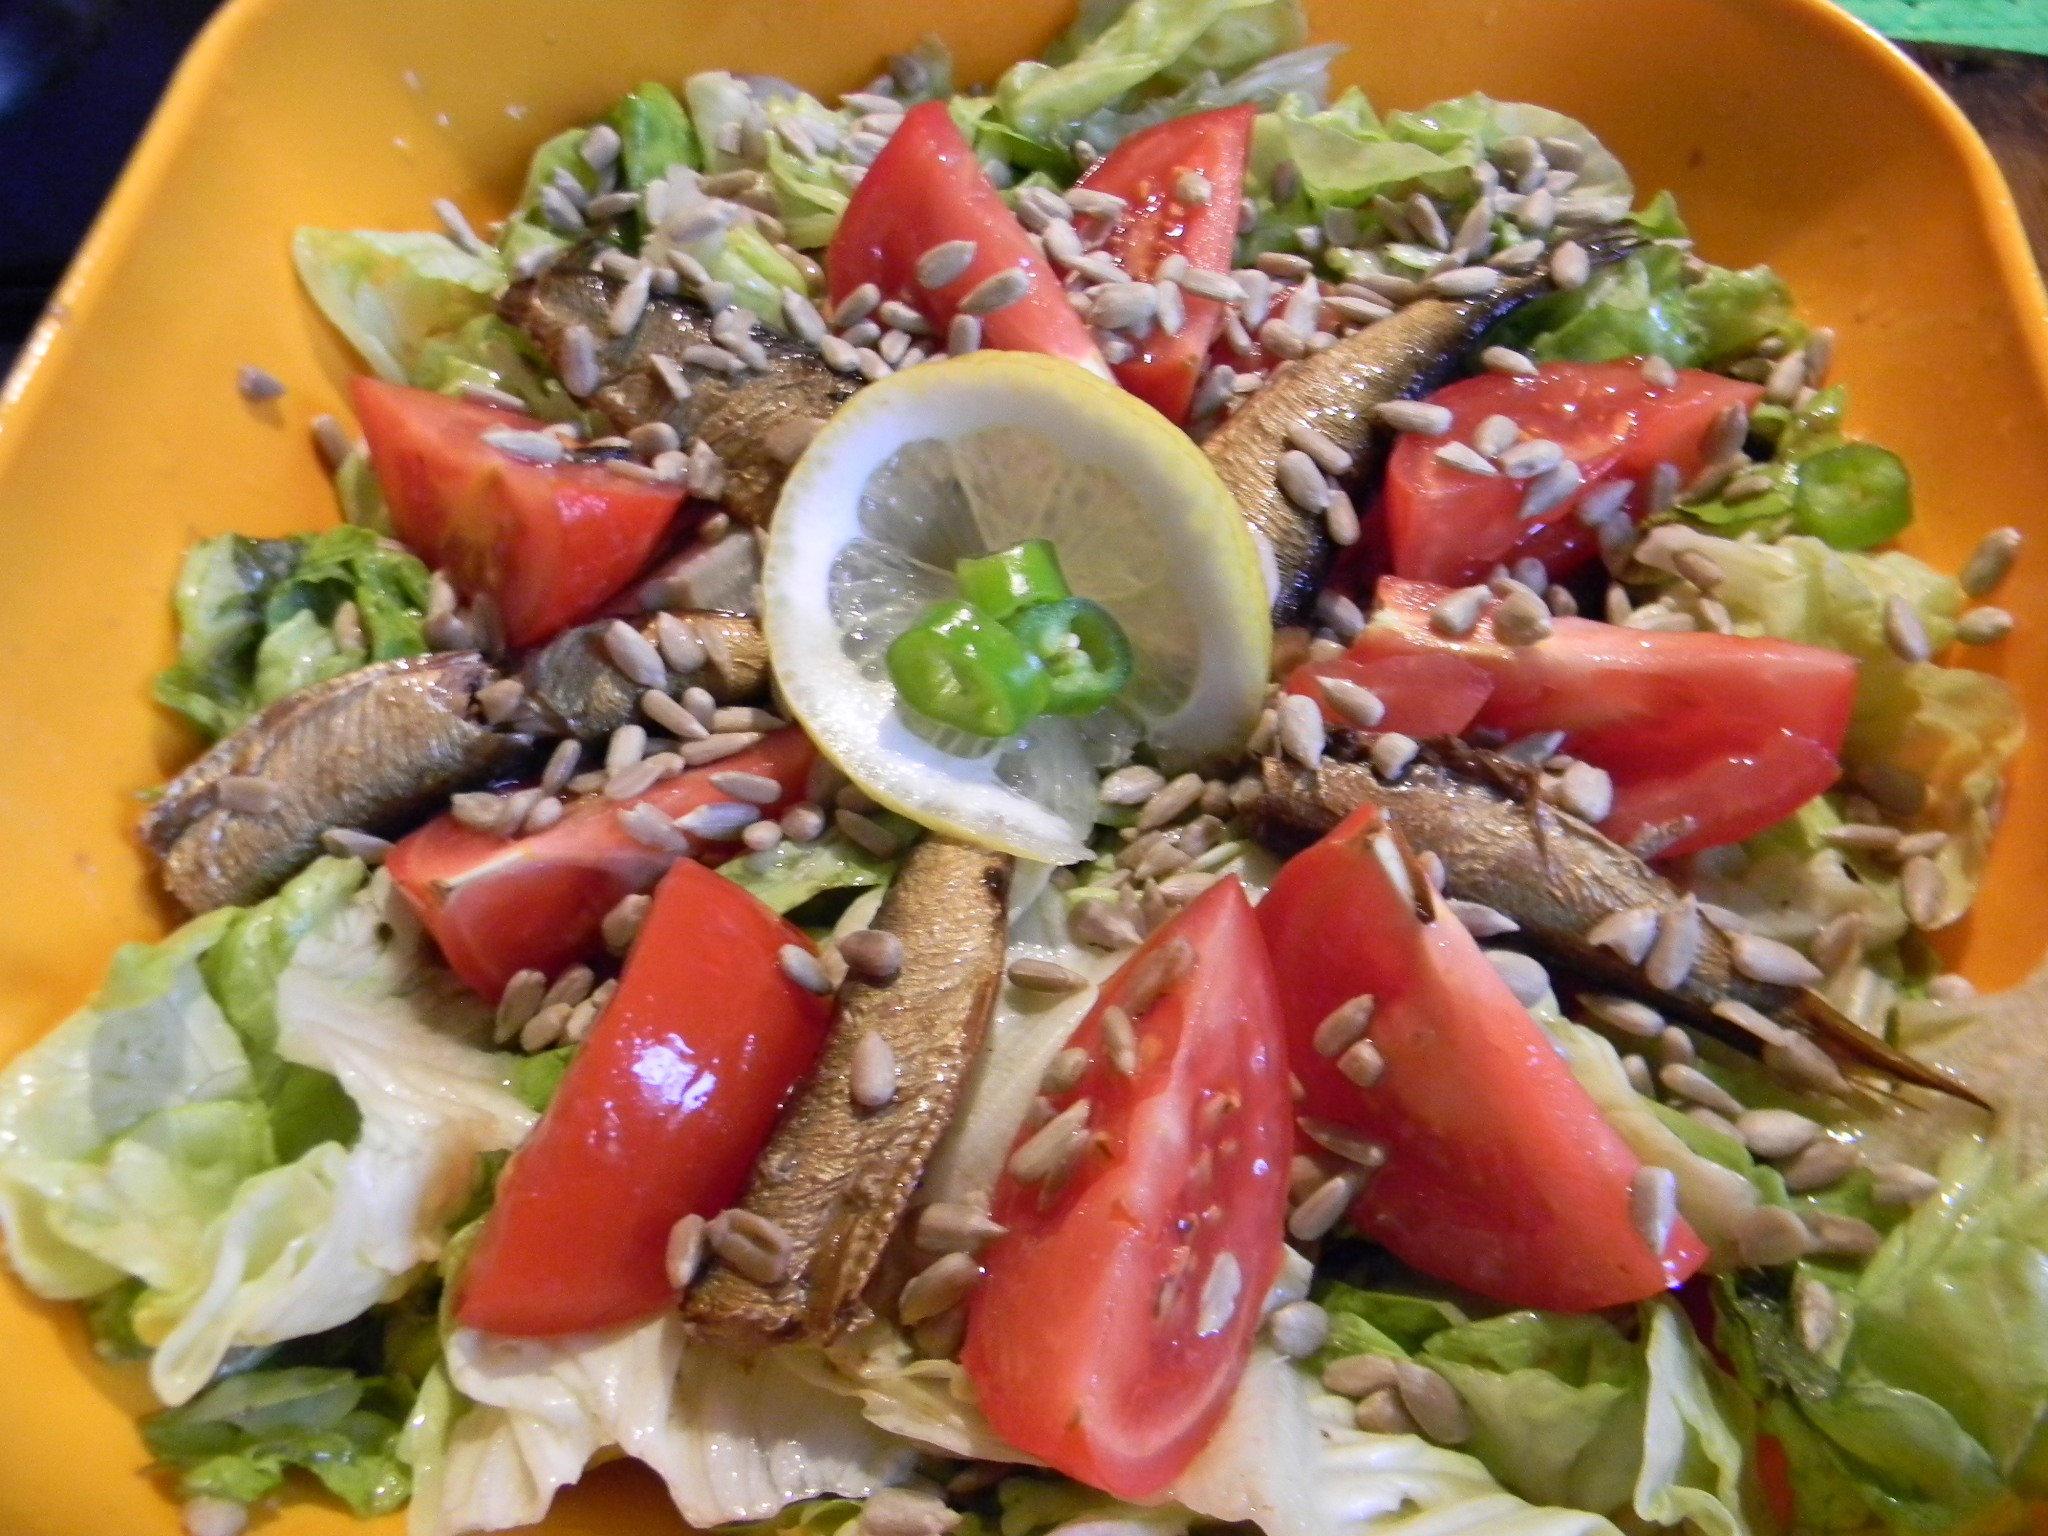 Salata ultra-rapida cu sprot afumat